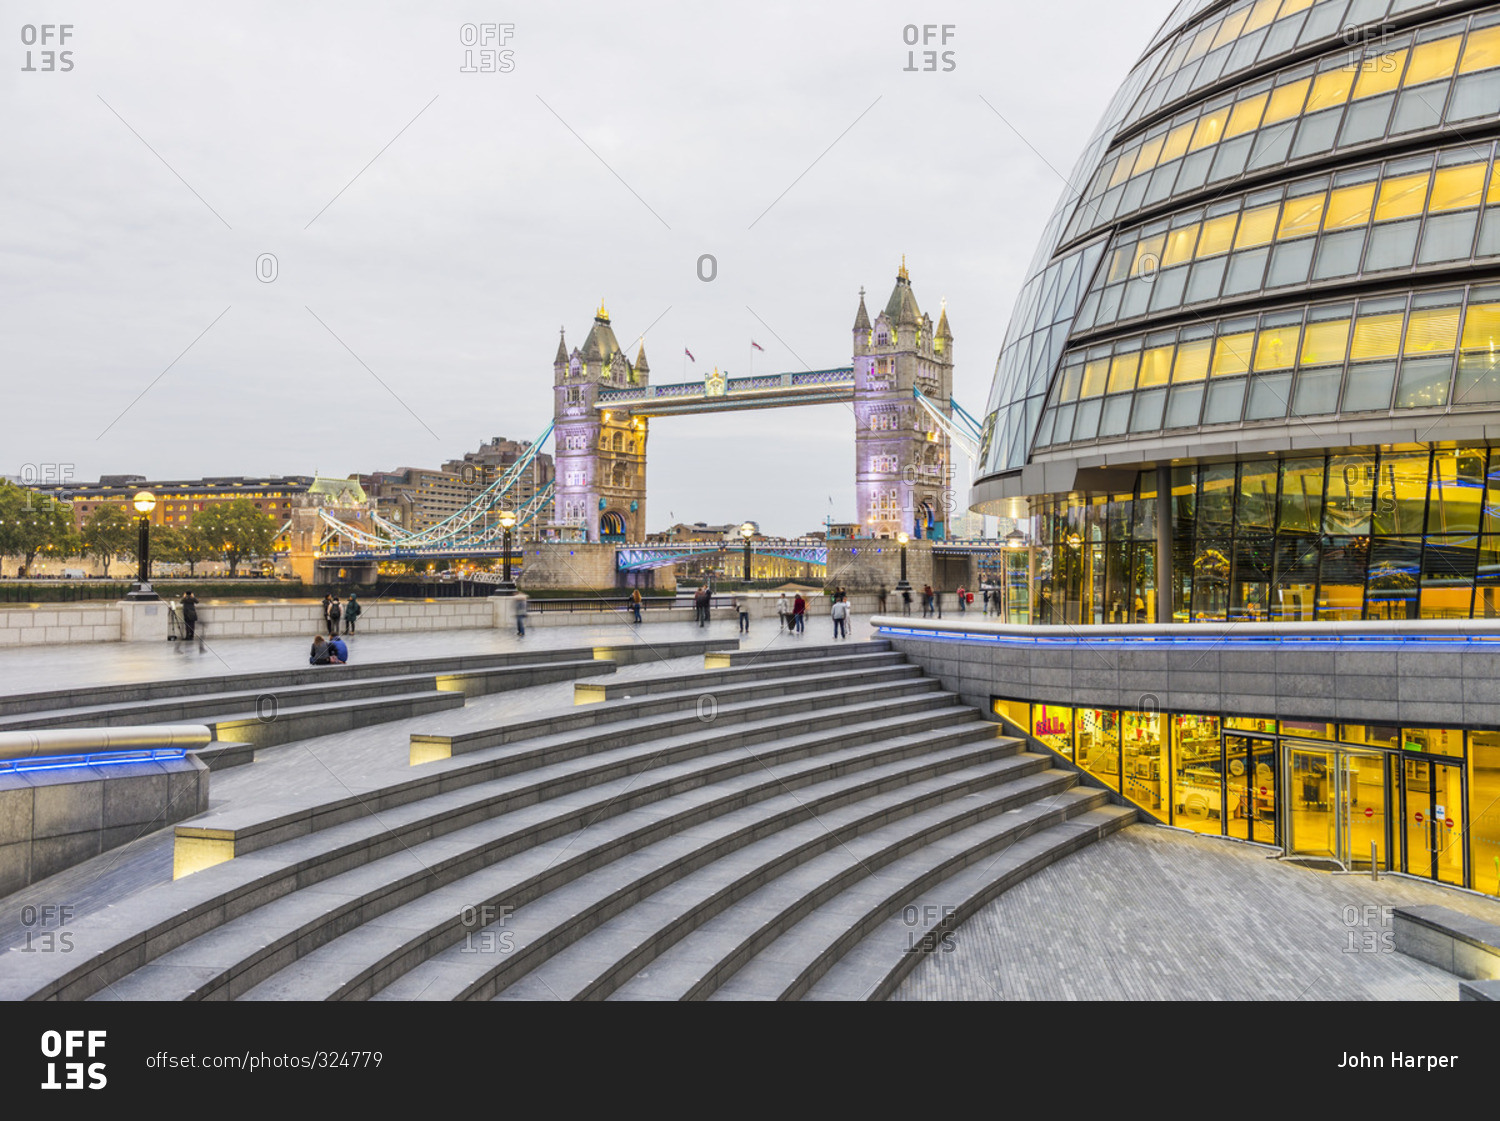 View of the Tower bridge, London, United Kingdom